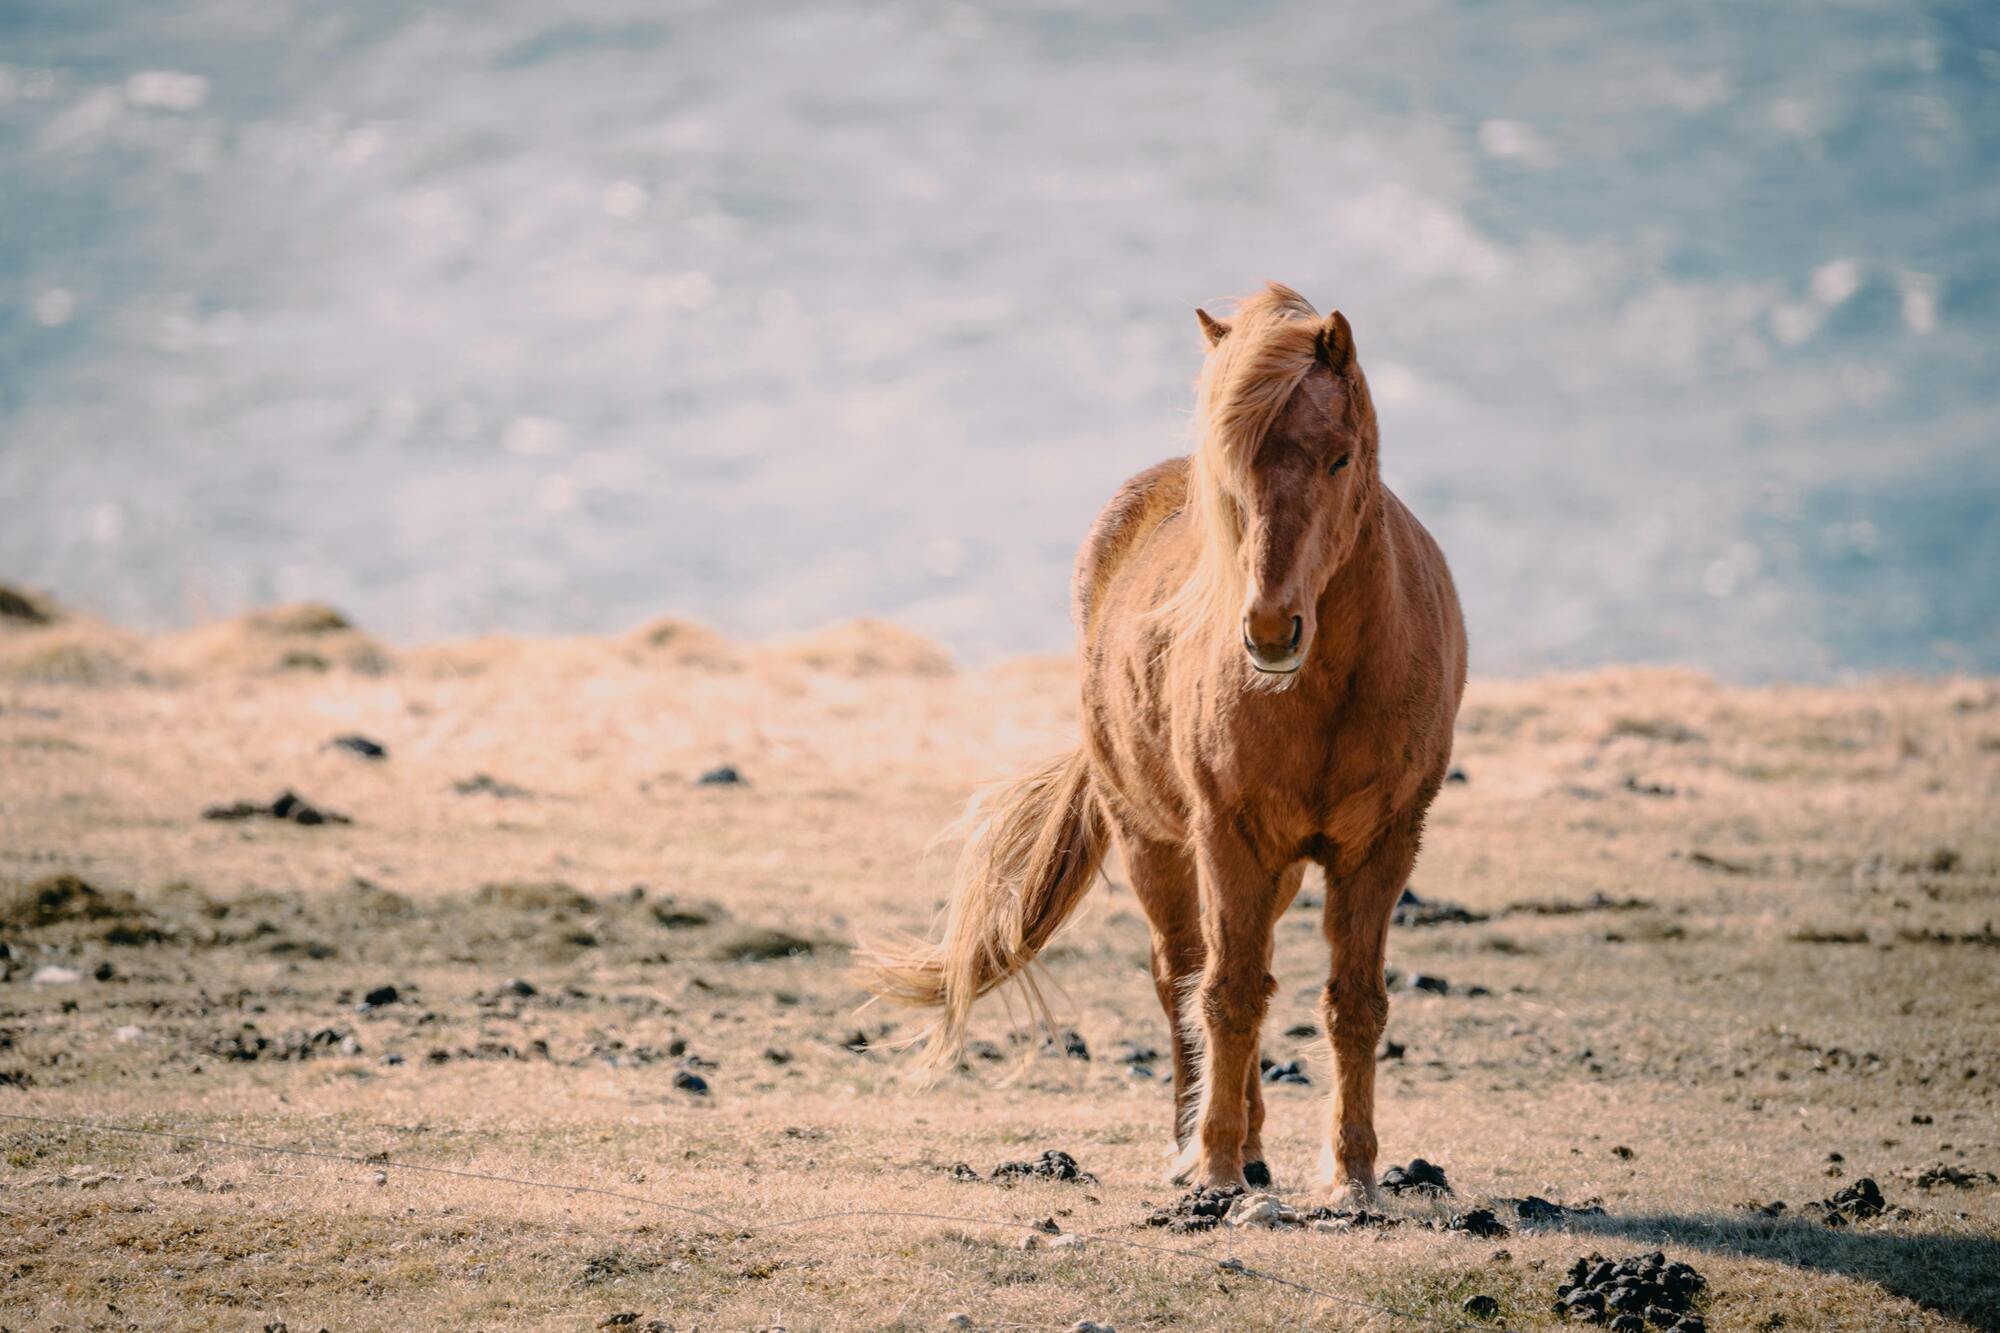 The wild horse is the spirit animal of Sagittarius